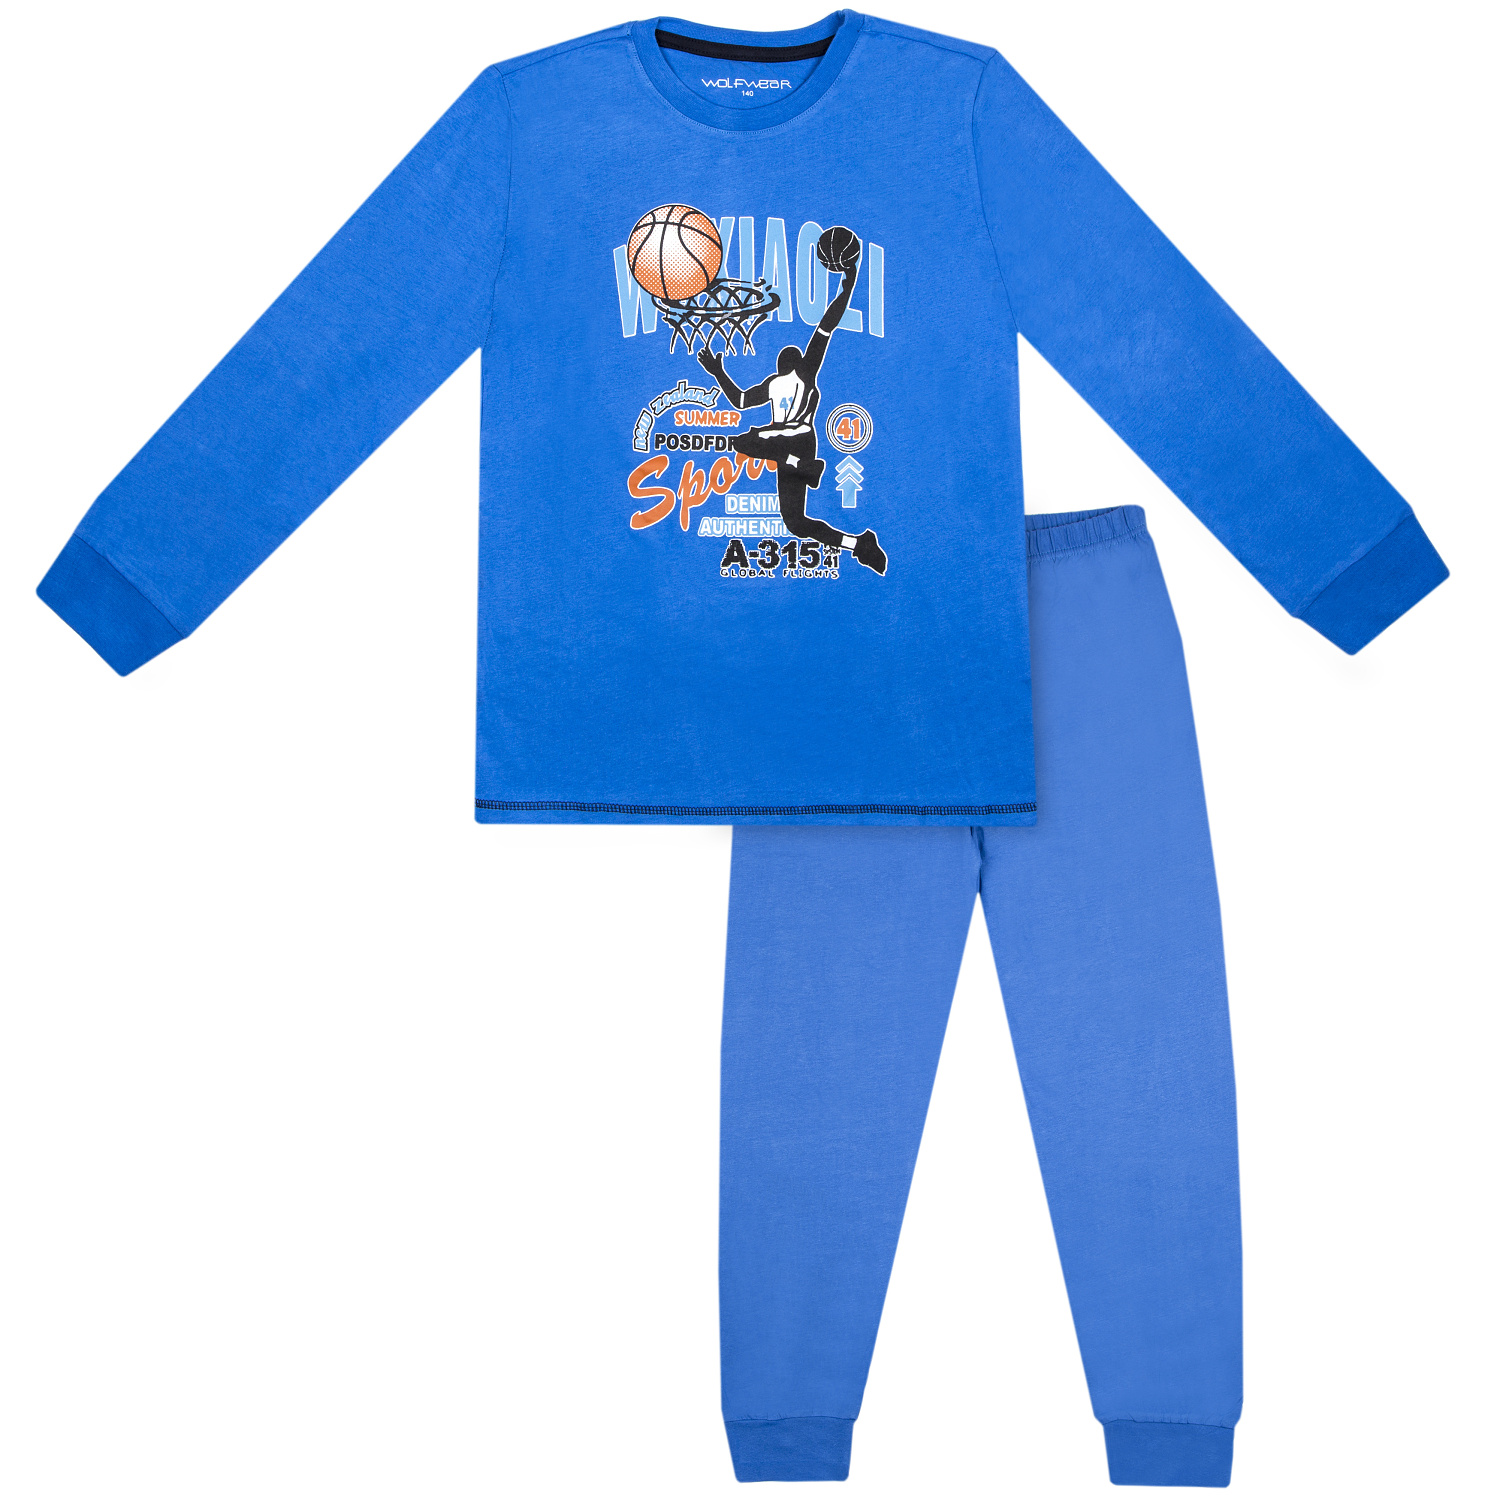 Chlapecké pyžamo - Wolf S2256B, modrá Barva: Modrá, Velikost: 170